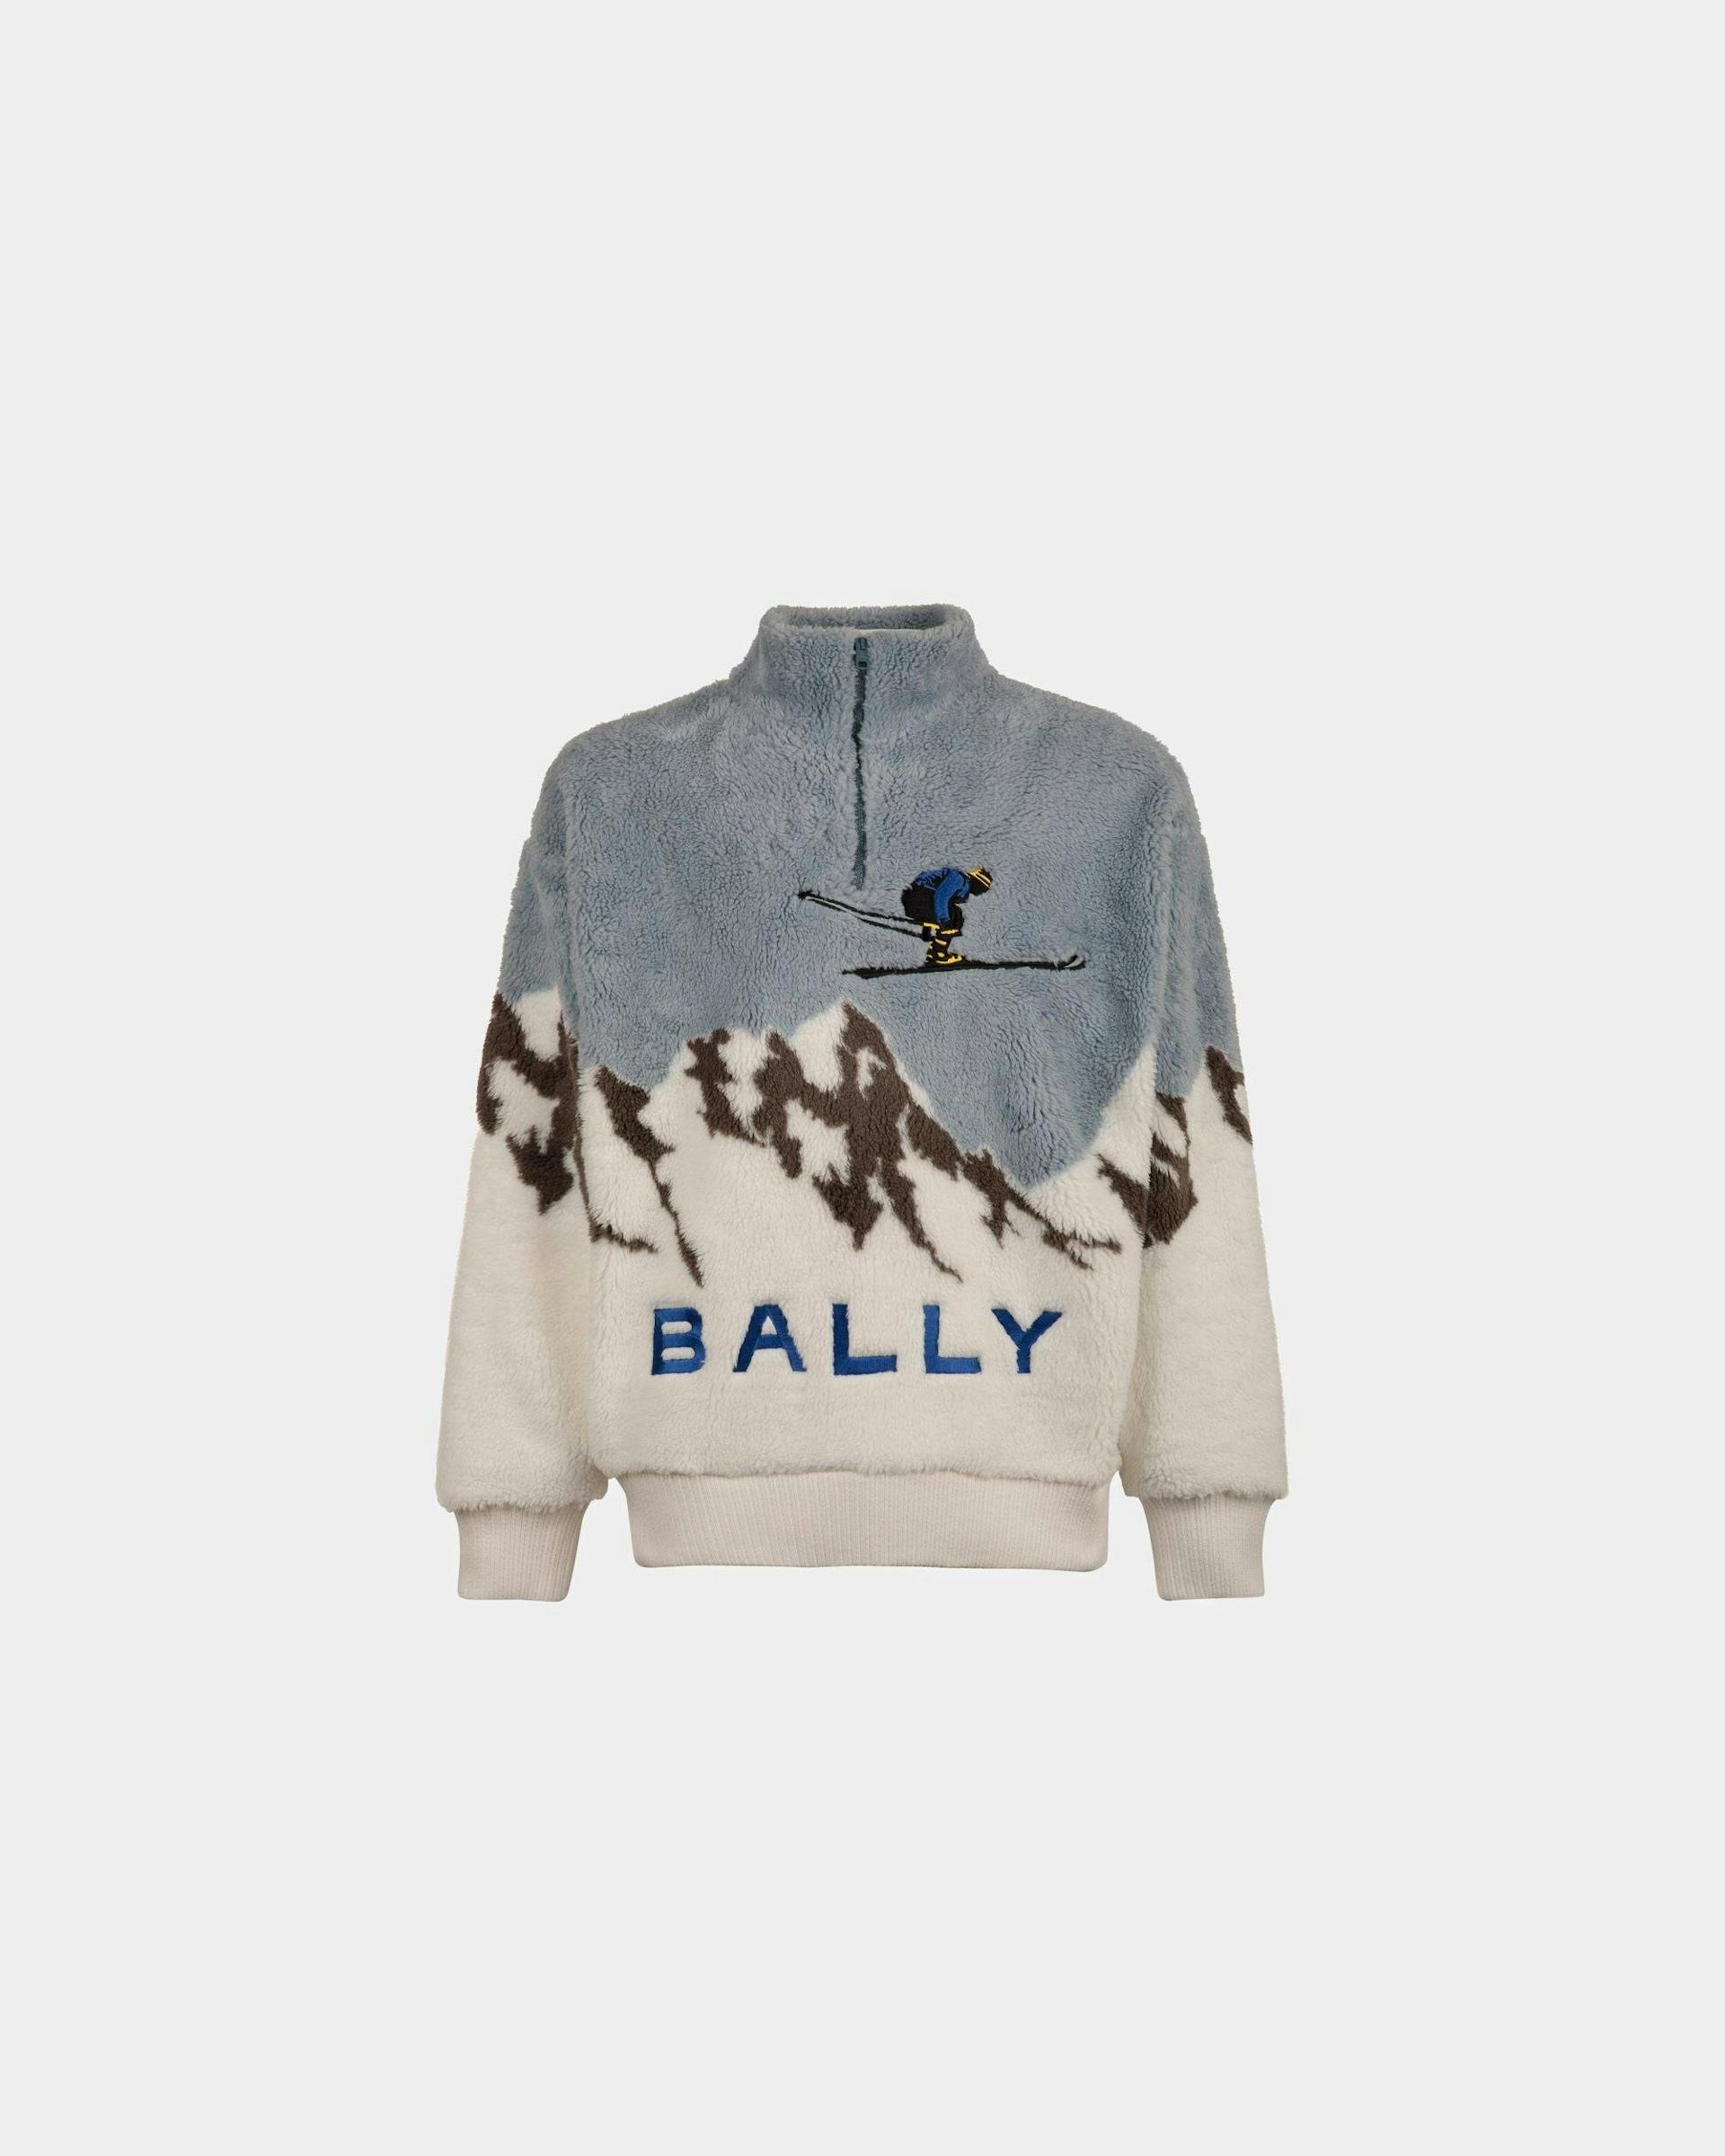 Men's Sweatshirt In Light Blue And White Sherpa Fleece | Bally | Still Life Front